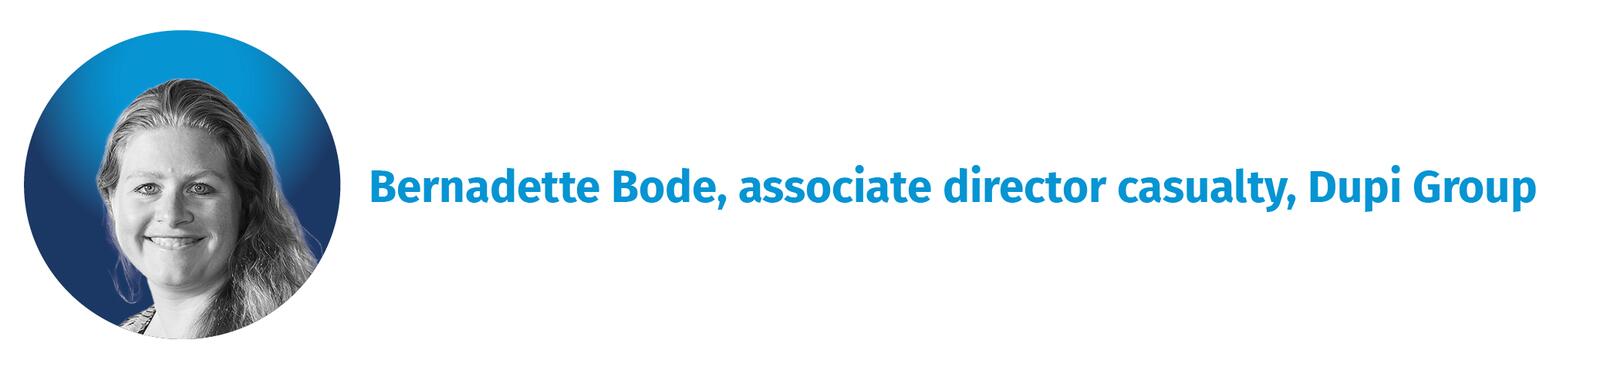 Bernadette-Bode,-associate-director-casualty,-Dupi-Group